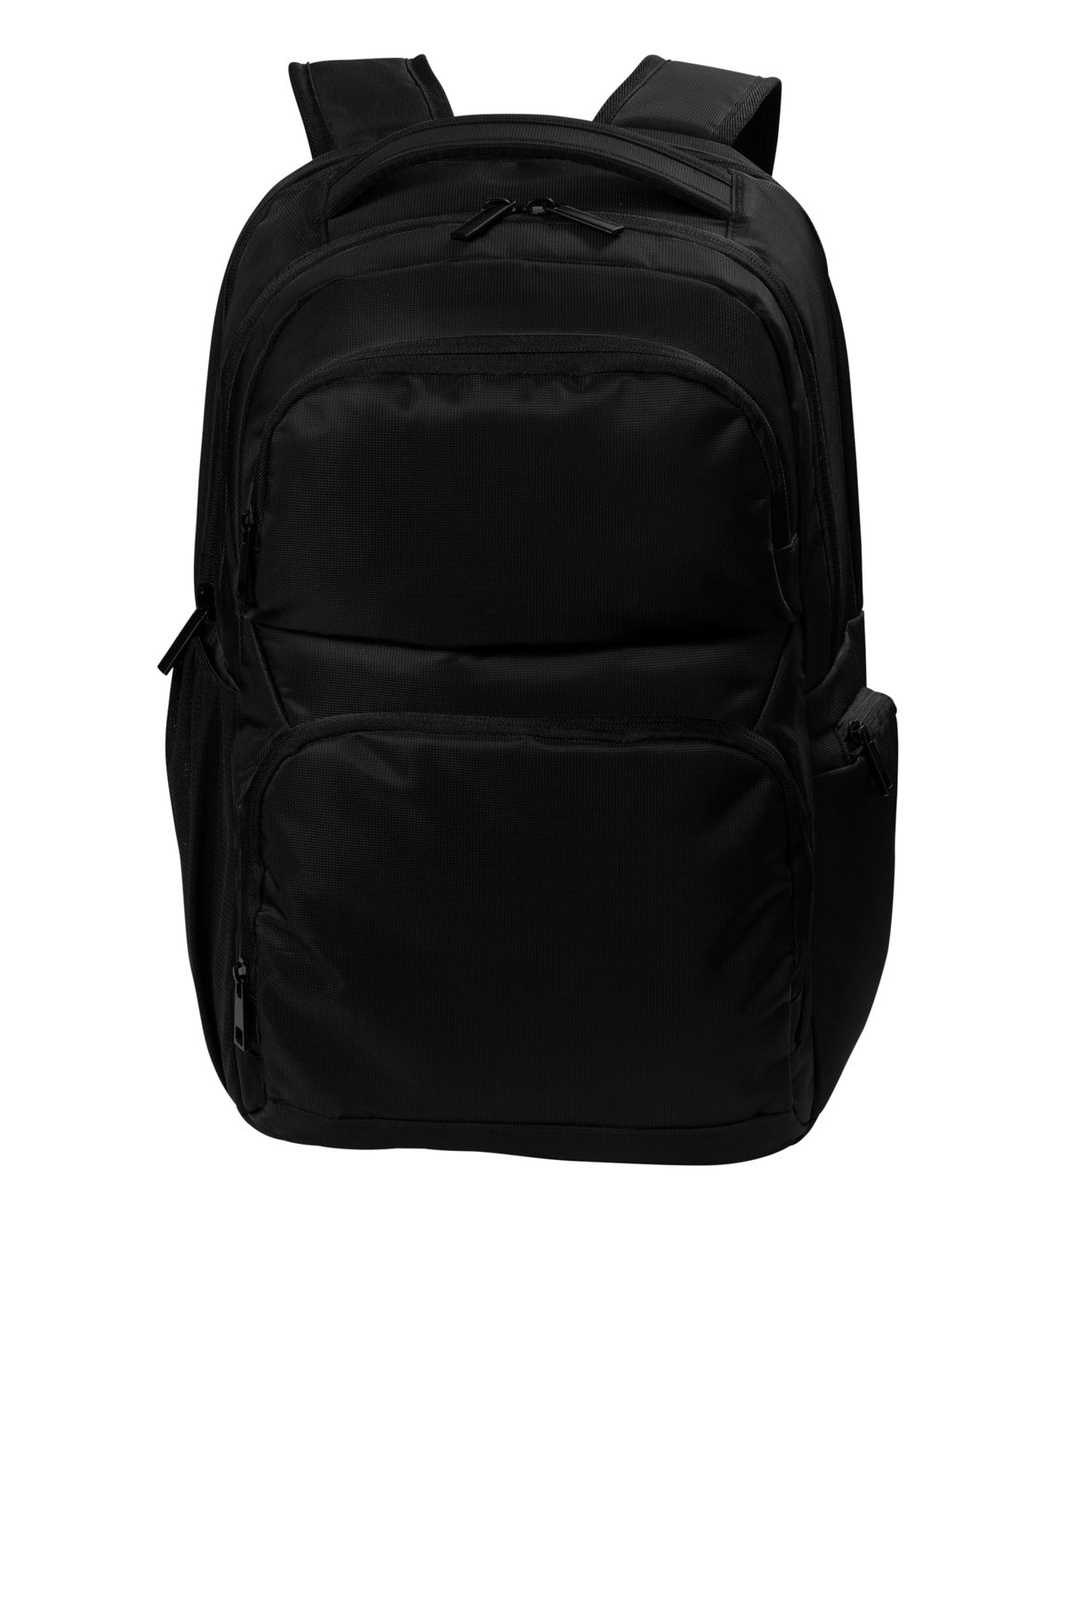 Port Authority BG224 Transit Backpack - Deep Black - HIT a Double - 1